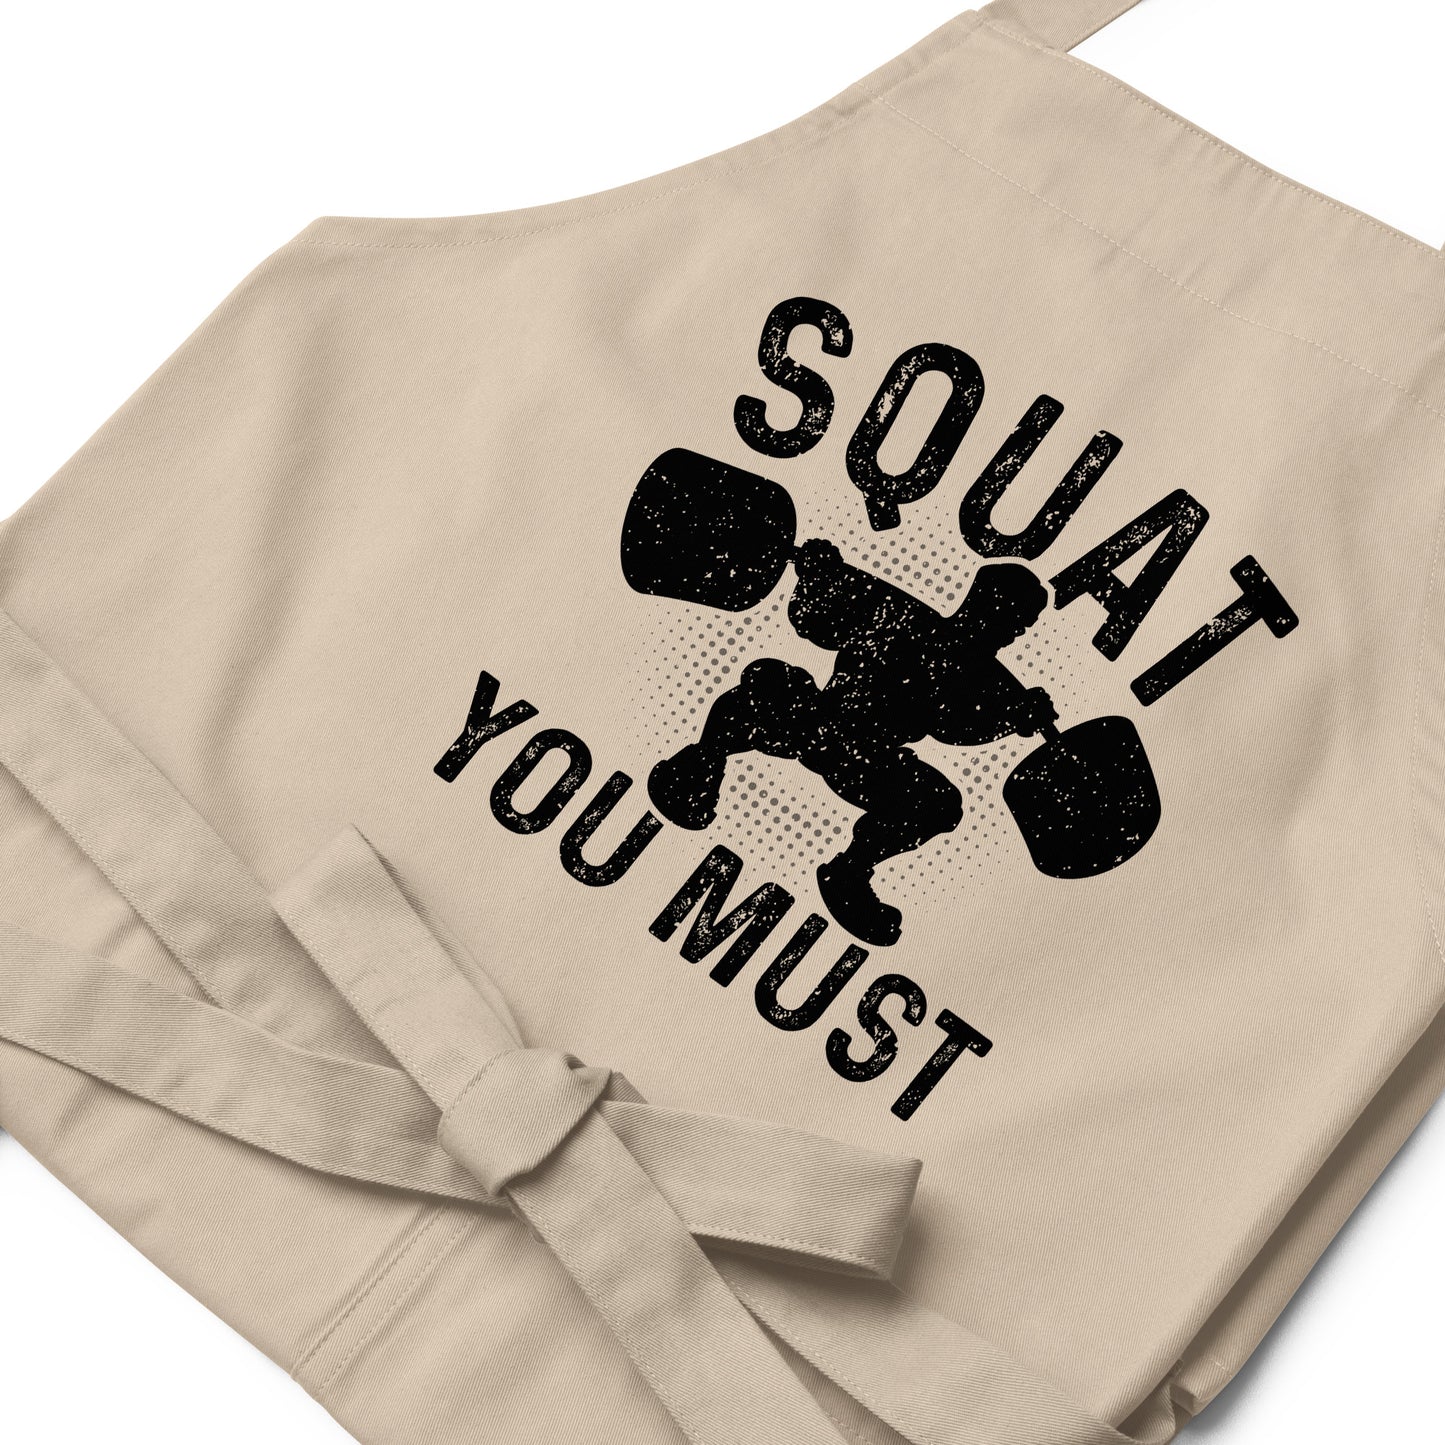 Squat You Must Organic cotton apron